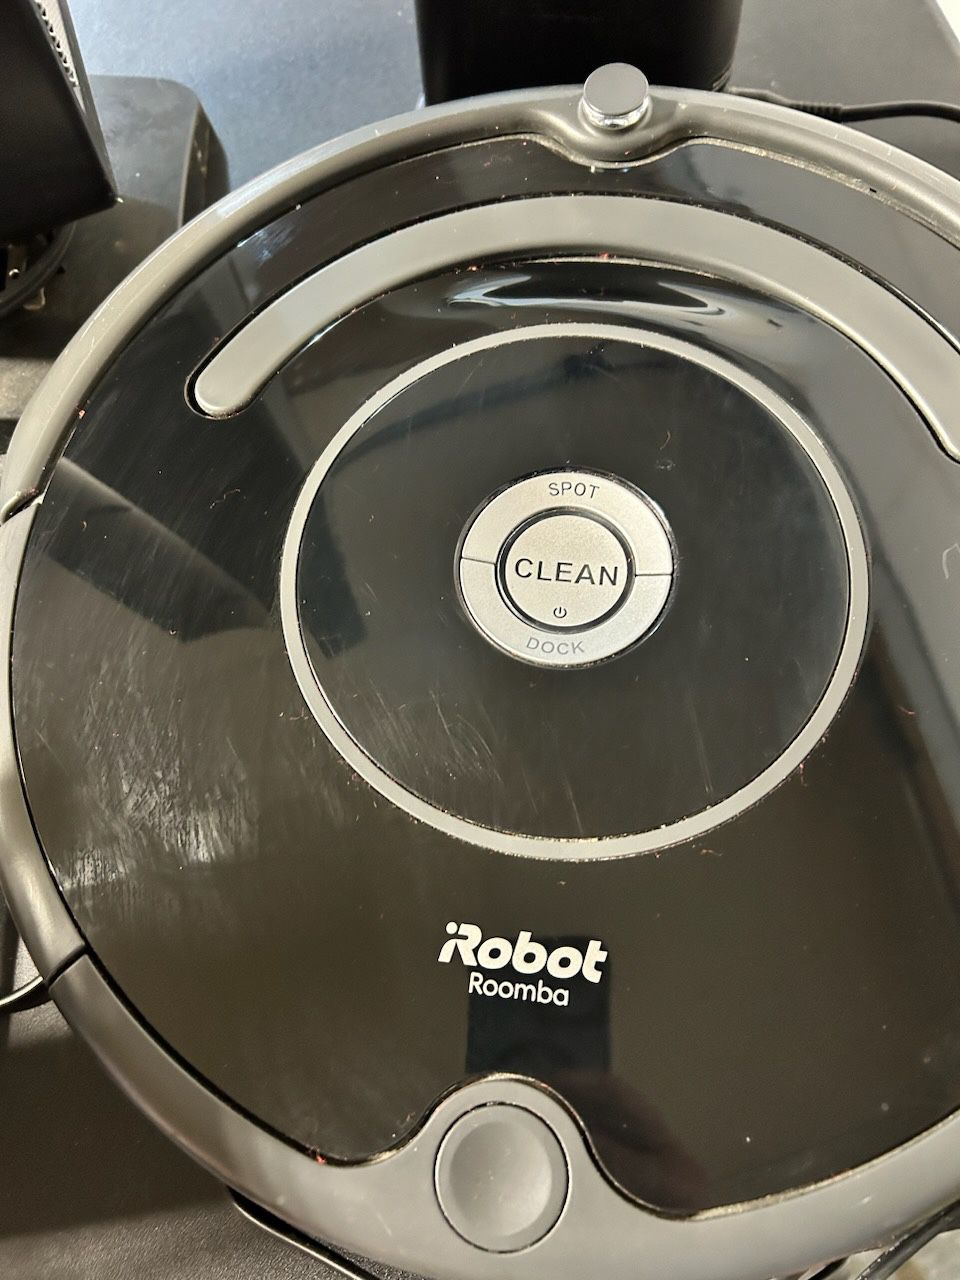 iRobot Roomba 